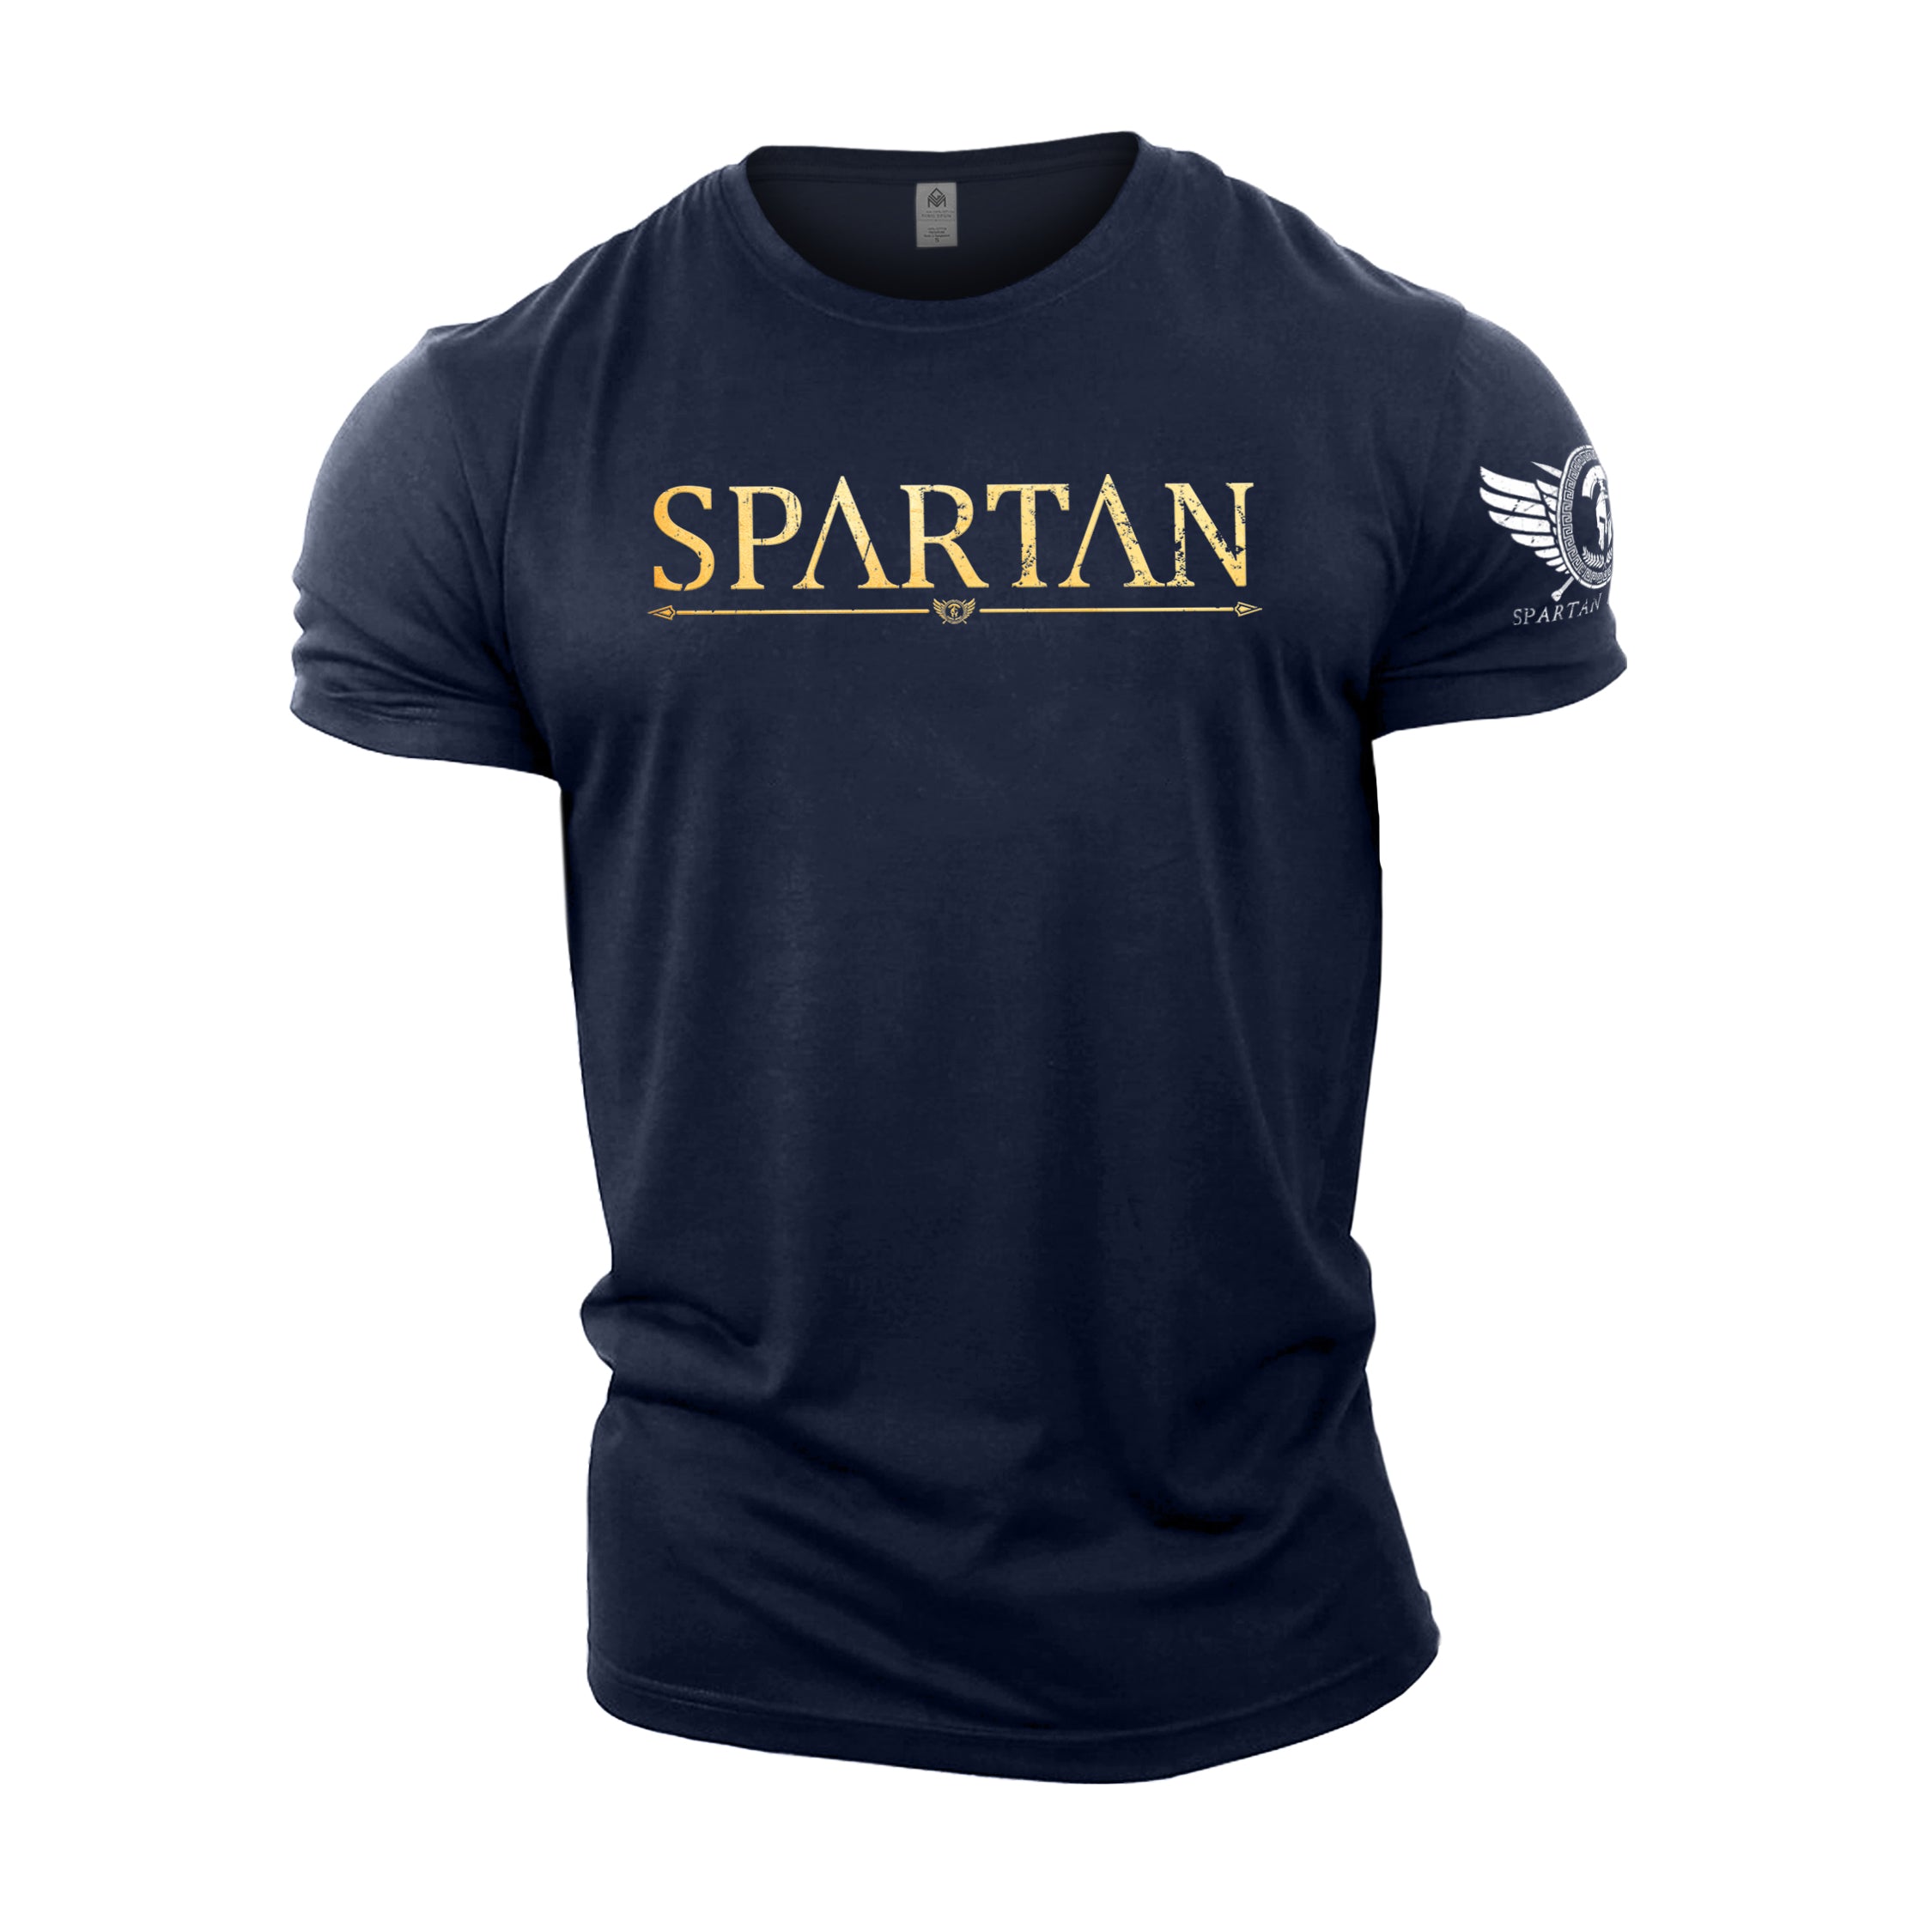 Spartan Gold - Spartan Forged - Gym T-Shirt